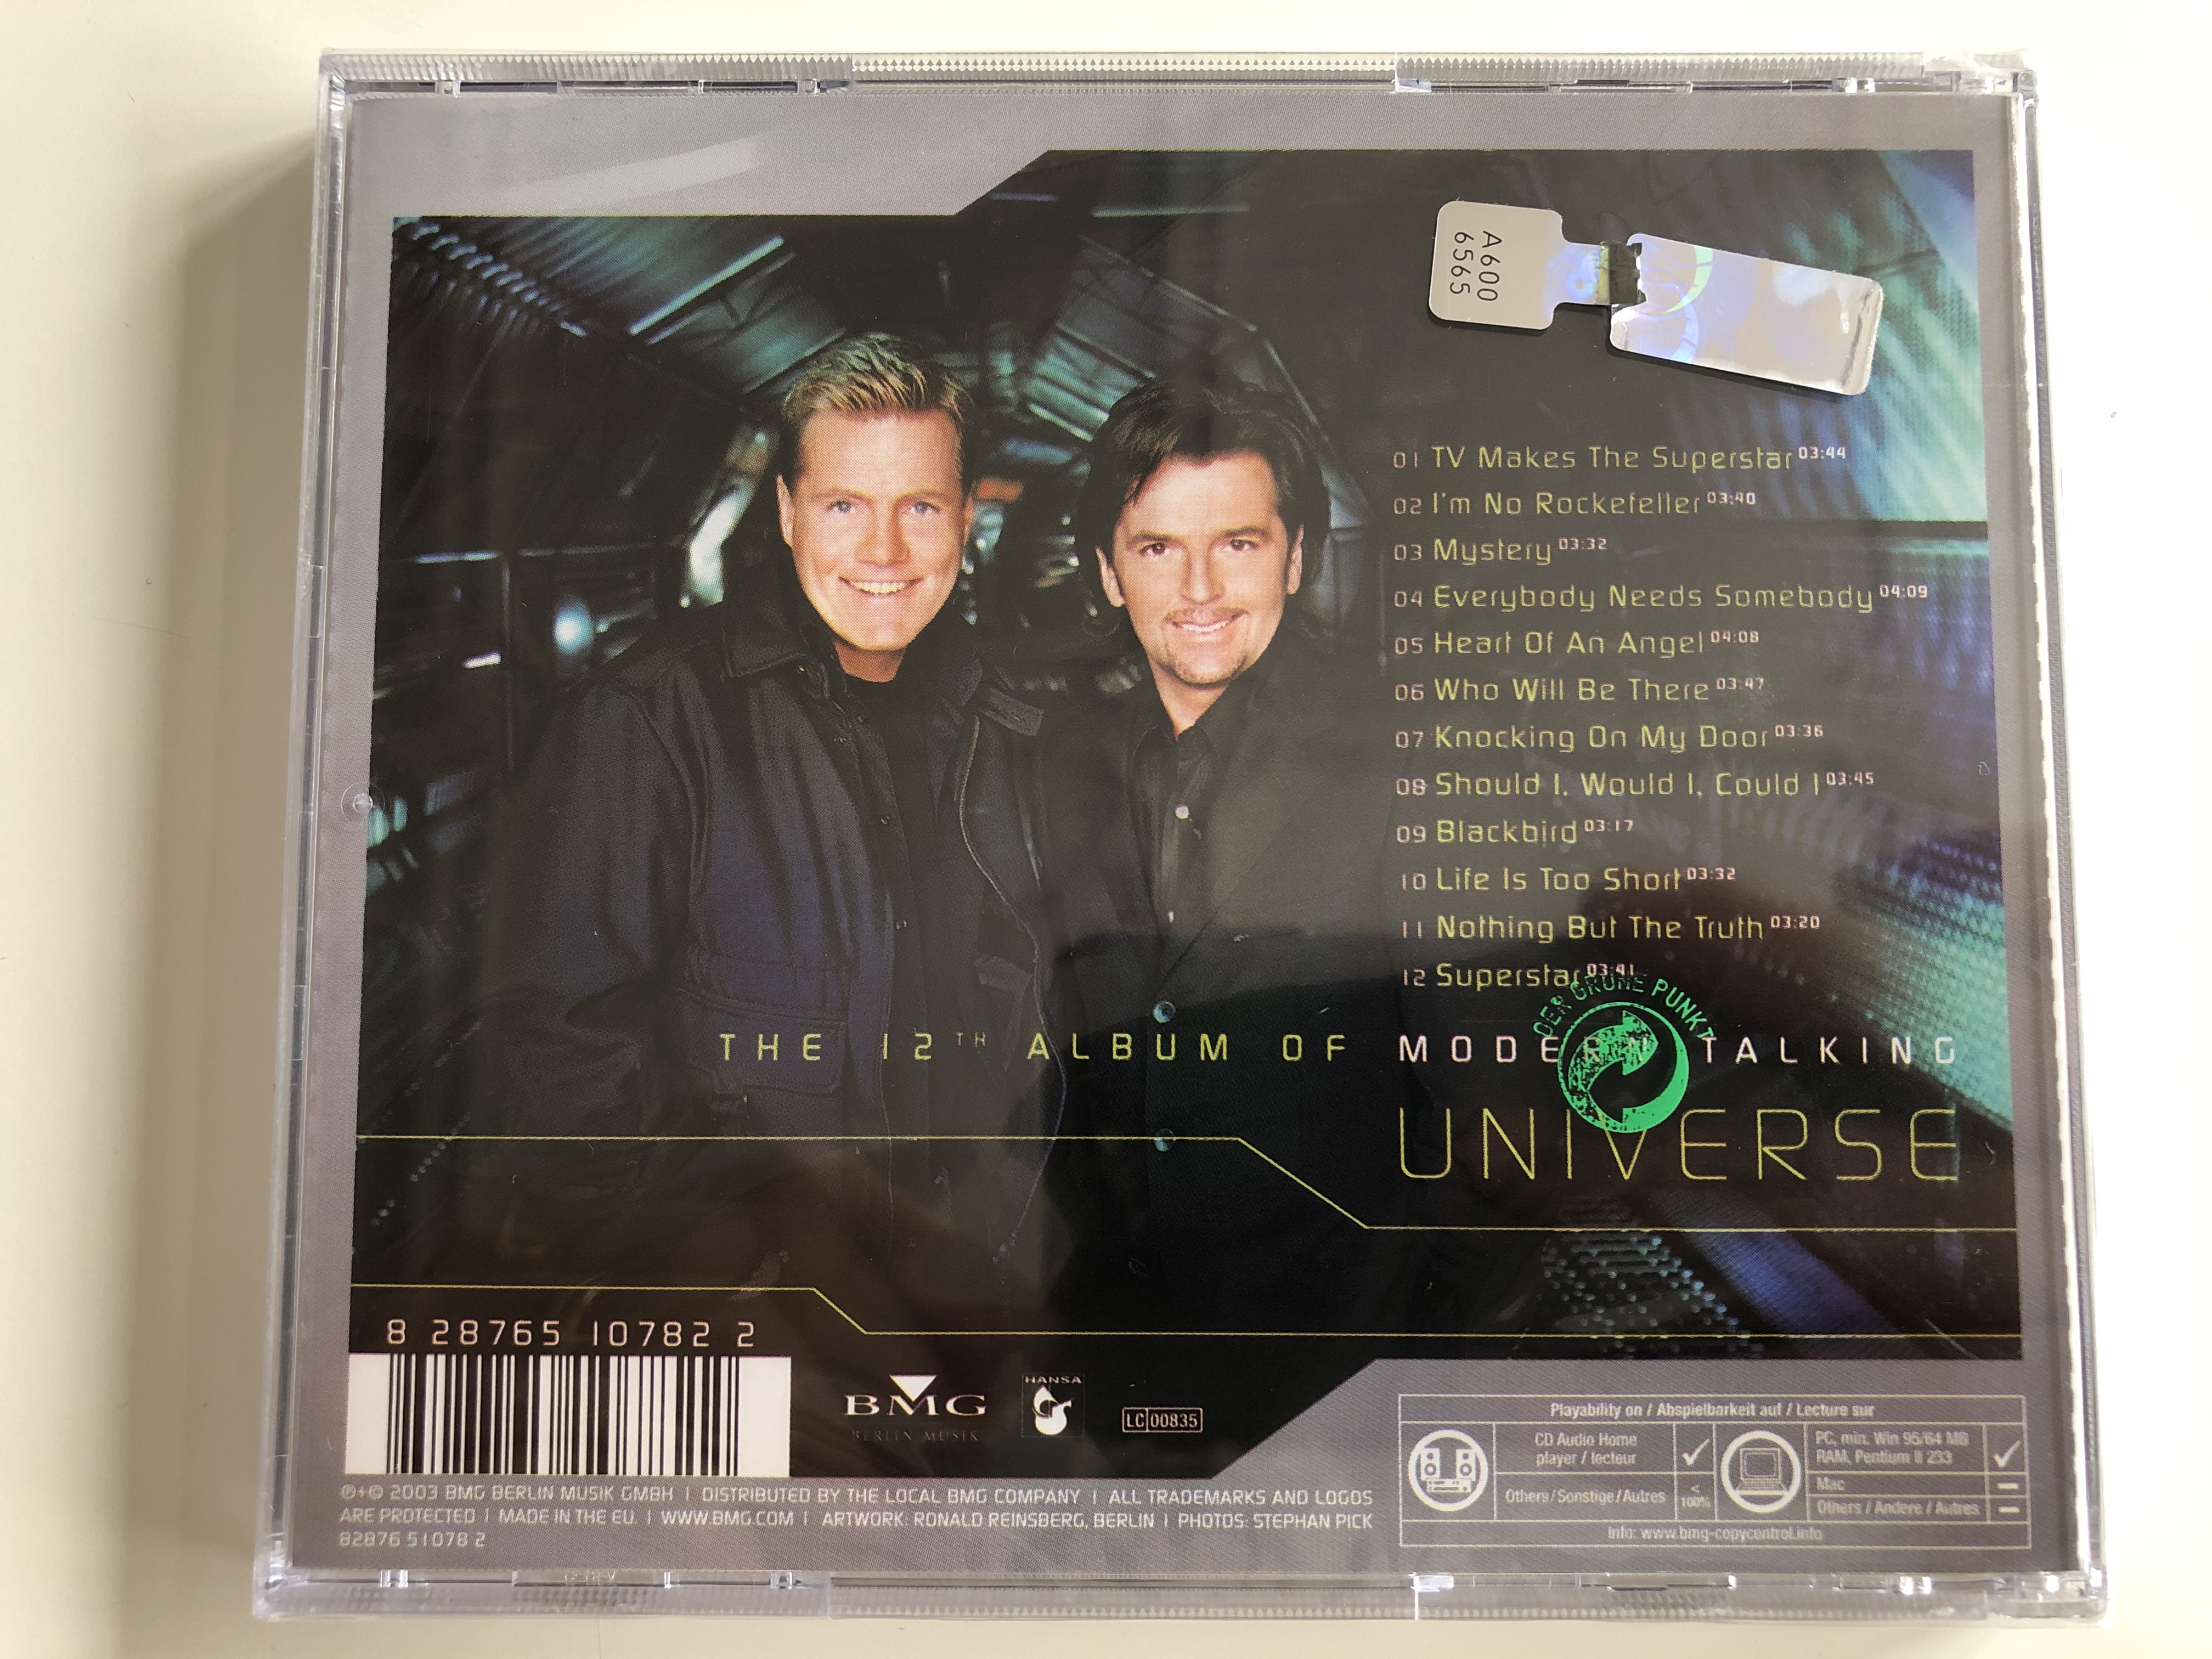 modern-talking-universe-the-12th-album-bmg-berlin-musik-audio-cd-2003-82876-51078-2-2-.jpg